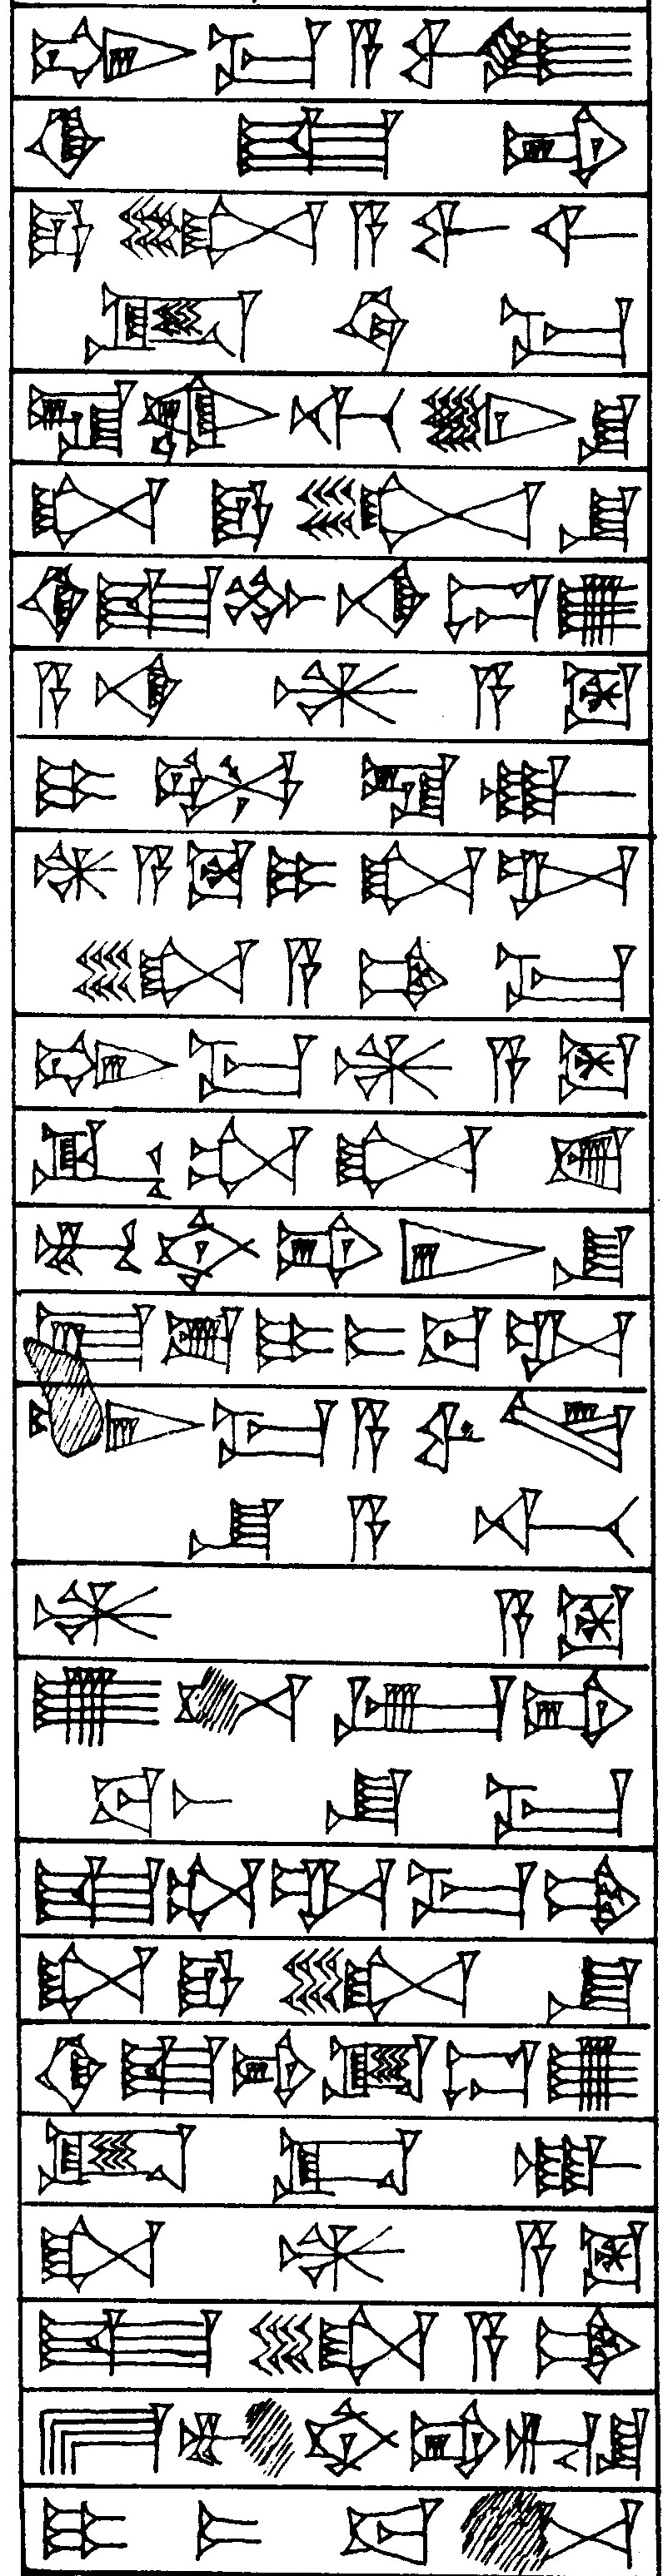 Law § 2 - Cuneiform - Law Code of Hammurabi